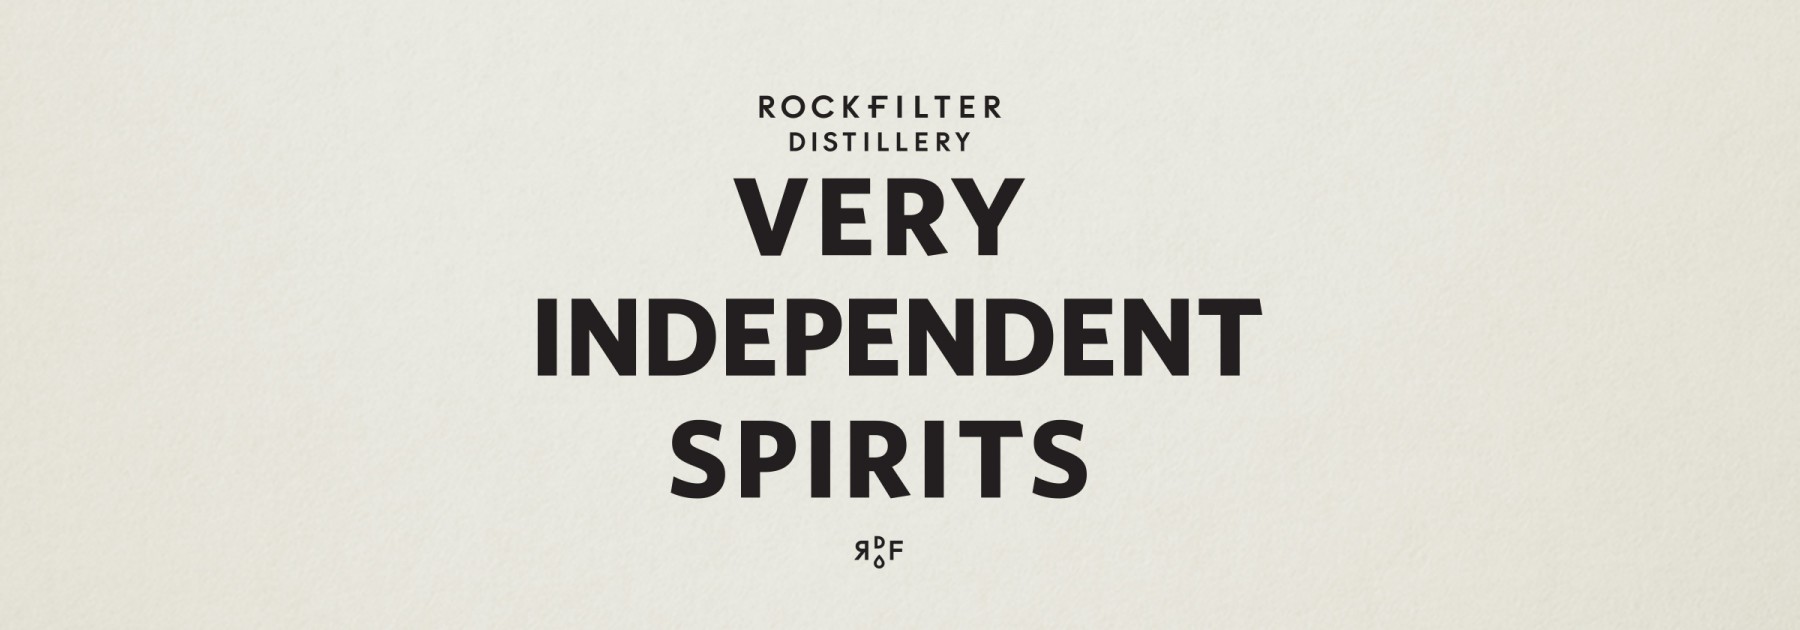 RockFilter Distillery branding and typography by Werner Design Werks